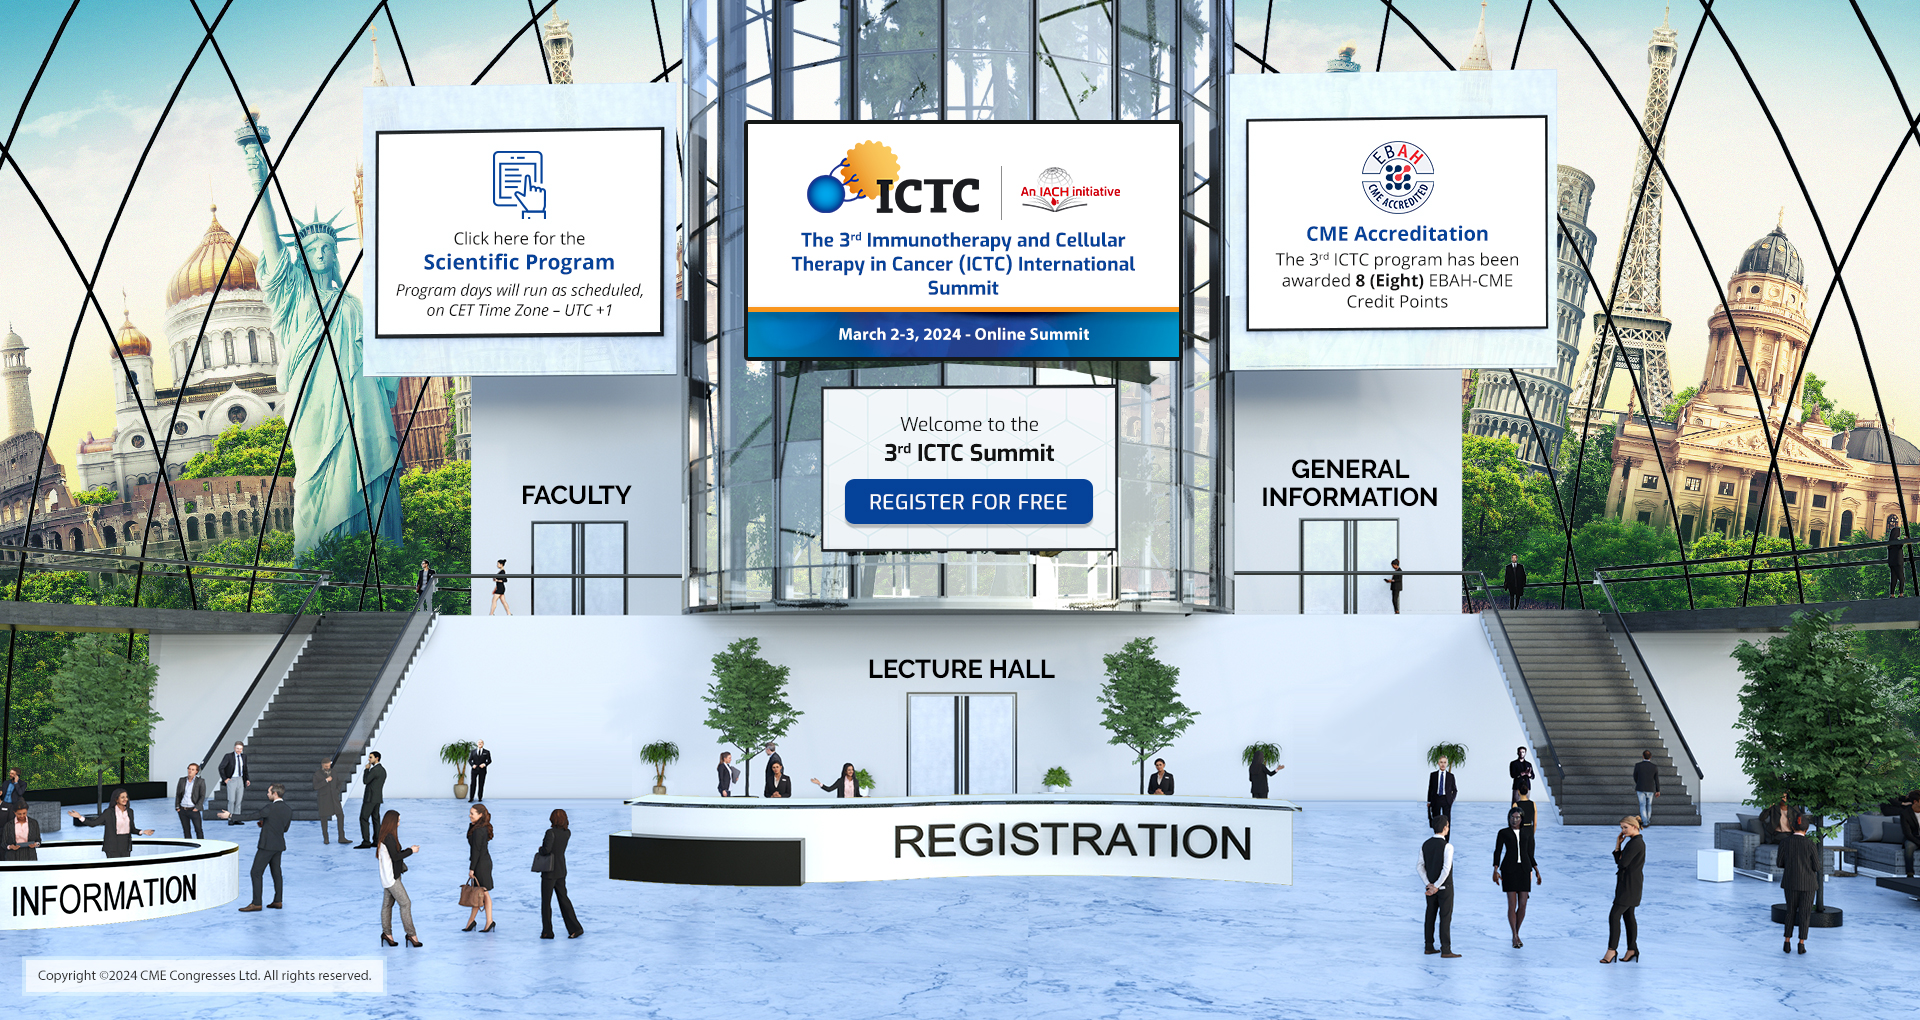 The 3rd ICTC International Summit